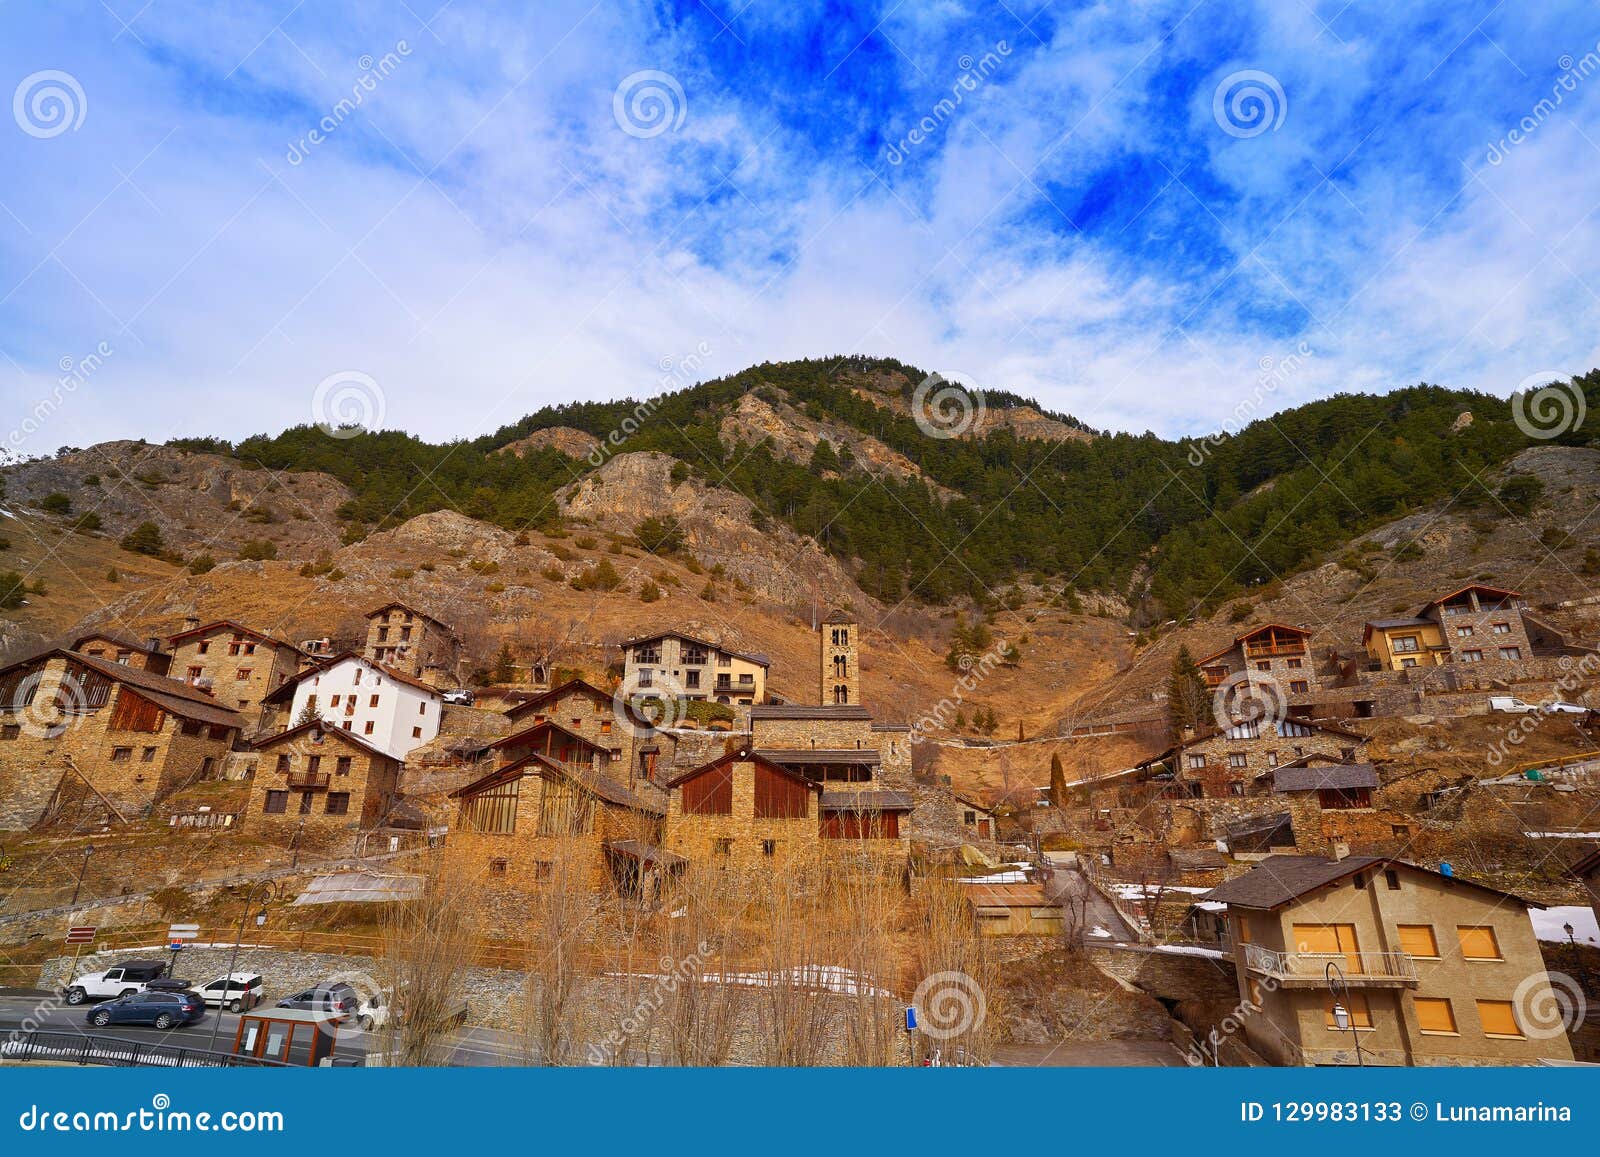 pal village in andorra pyrenees